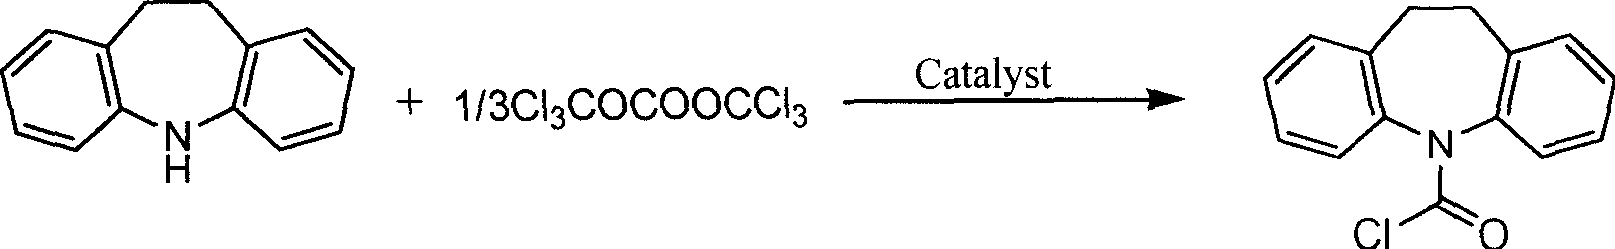 Chemically synthetic method for N-chloroformyl imino dibenzyl